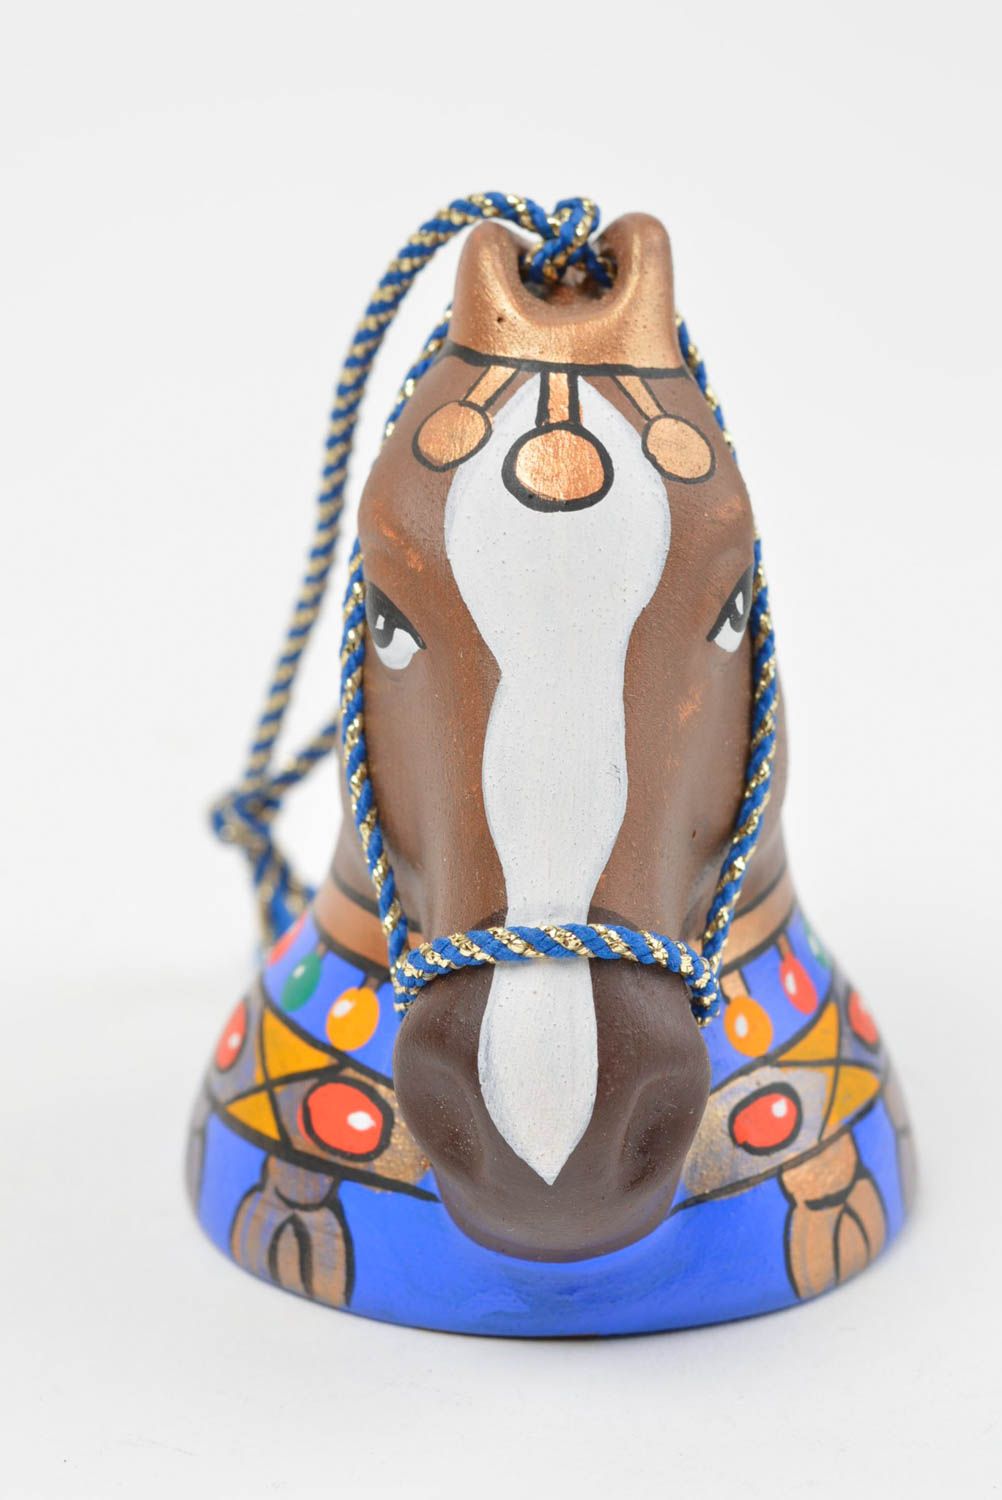 Handmade unusual ceramic bell cute souvenir in shape of horse unusual home decor photo 2